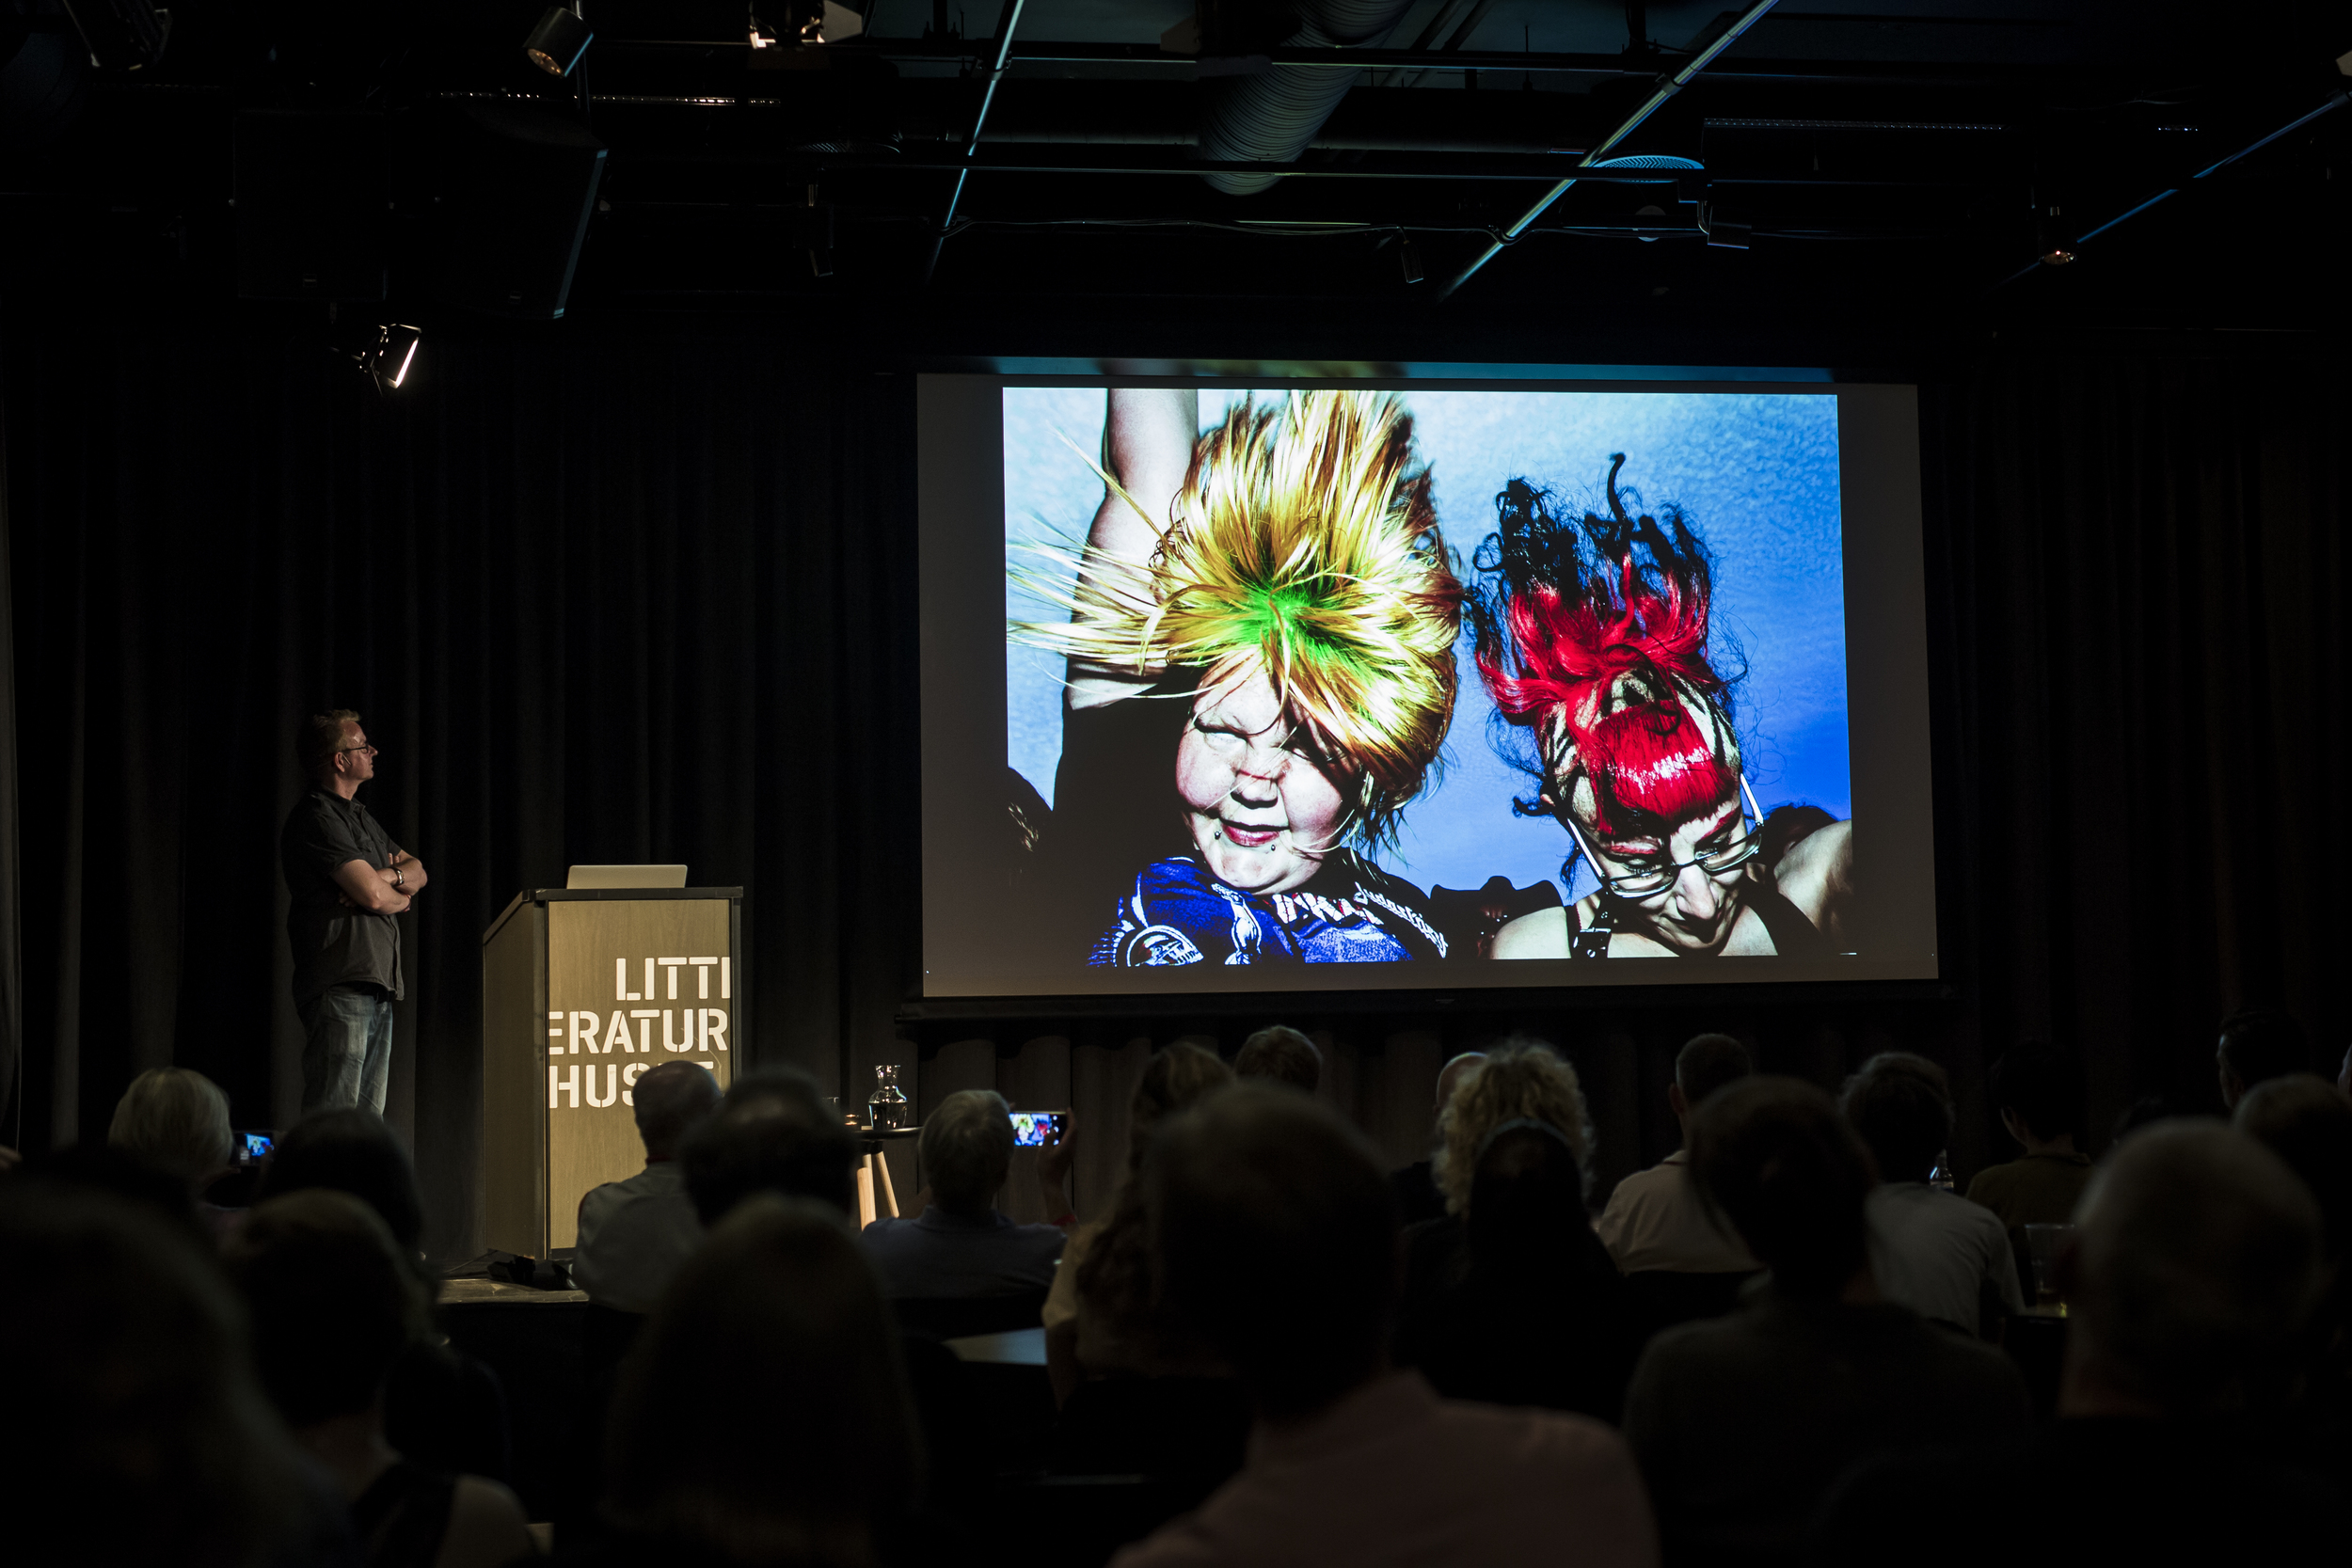  Den danske fotografen Jacob Ehrbahn presenterte fotoprosjektet "Headbangers With Friends",&nbsp;om europeiske headbangers. 